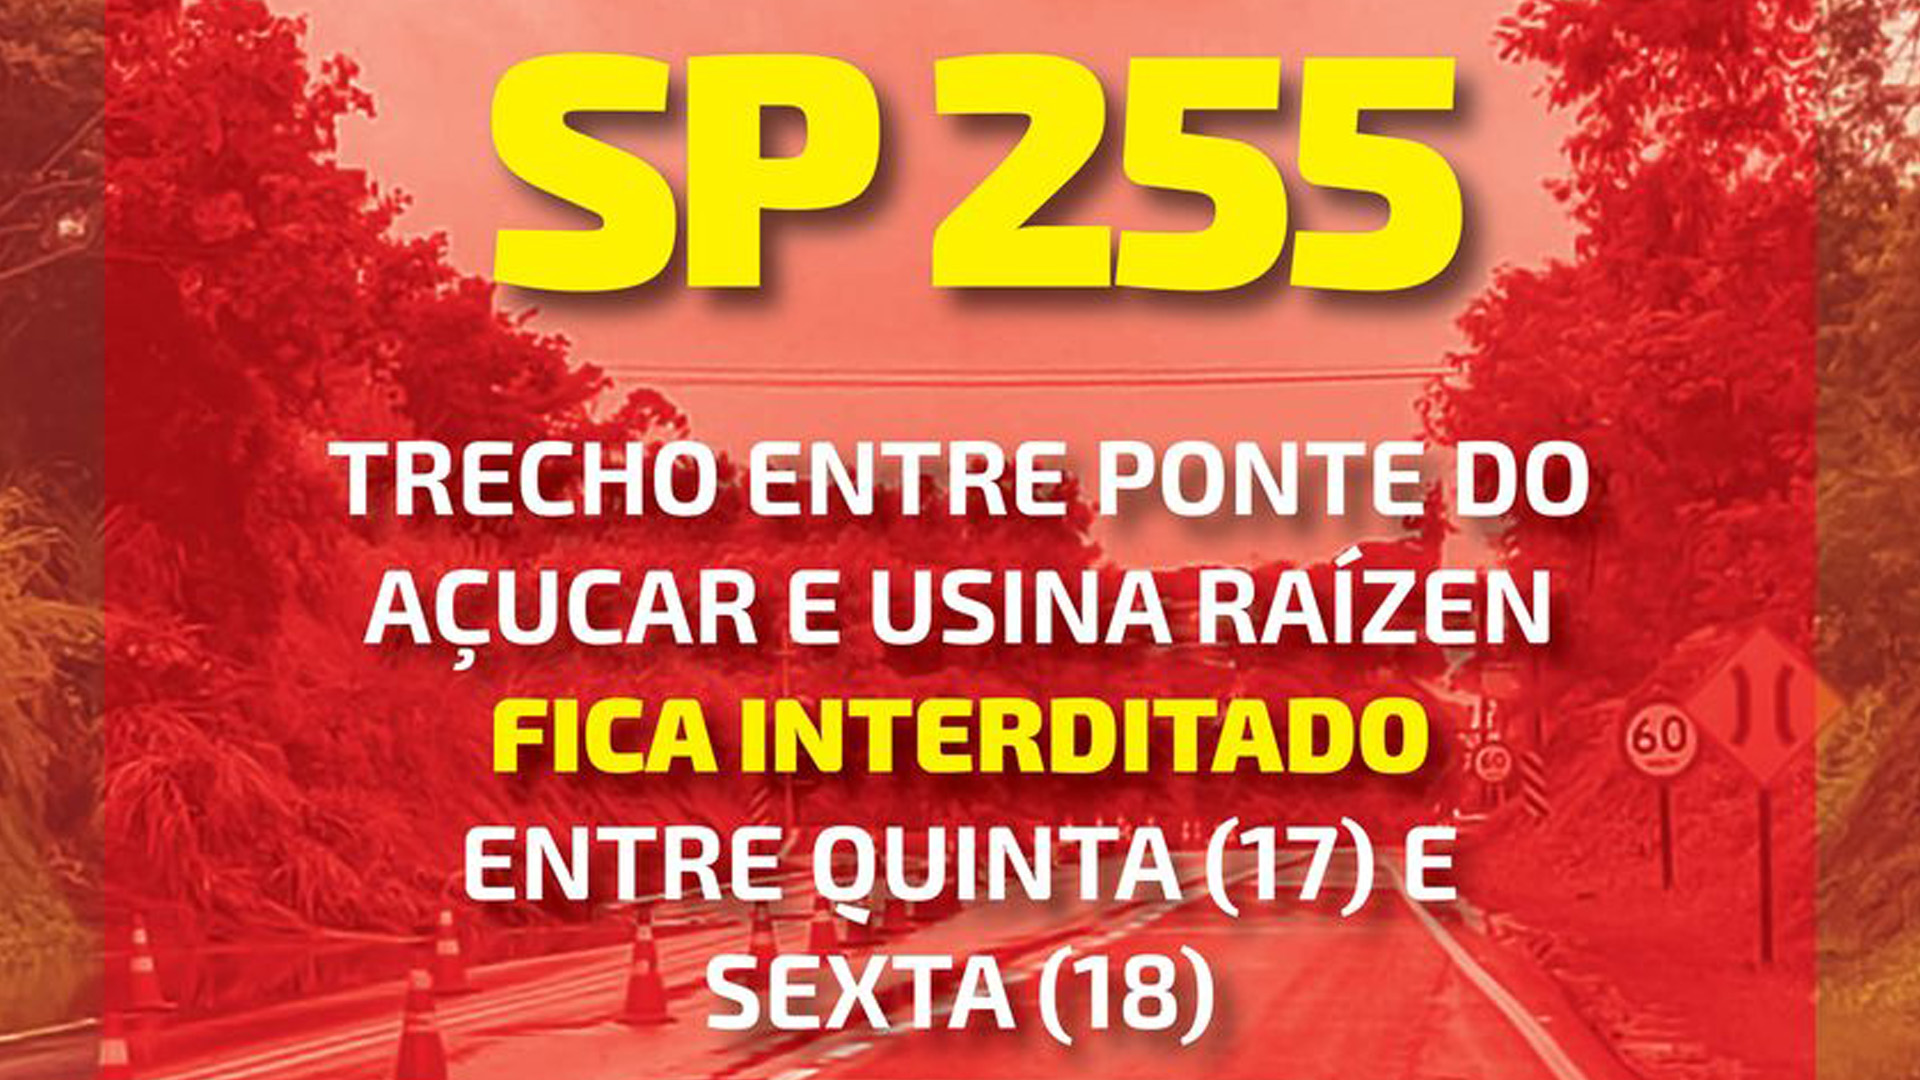 SP-255 FICA INTERDITADA NO TRECHO ENTRE A PONTE DO AÇÚCAR E USINA RAÍZEN, NA QUINTA-FEIRA, (17) E SEXTA-FEIRA, (18)